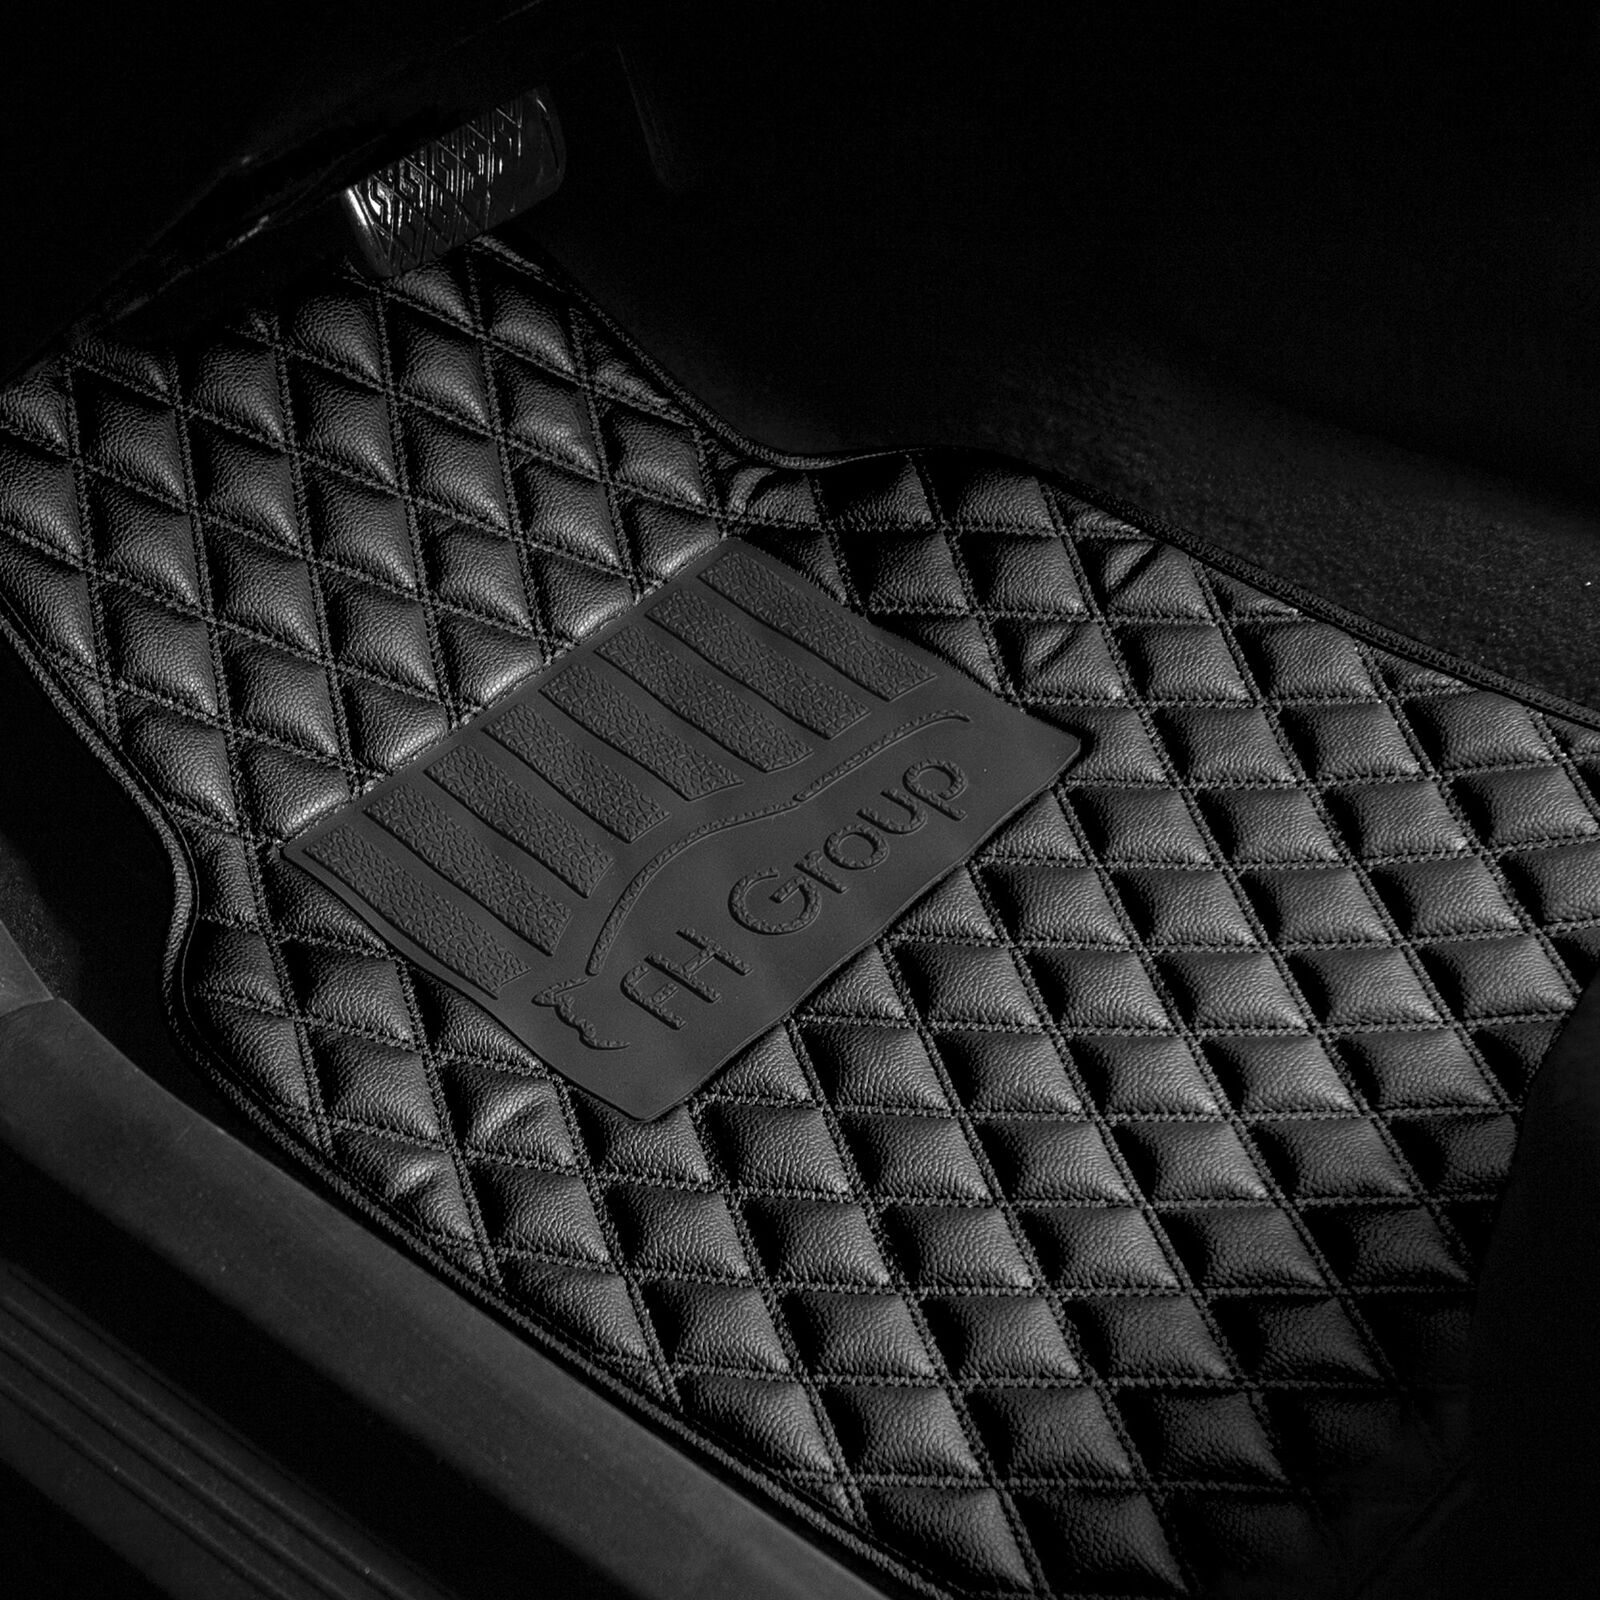 Louis Vuitton Floor Mats 5 Seater in Ngara - Vehicle Parts & Accessories,  Joylands Auto